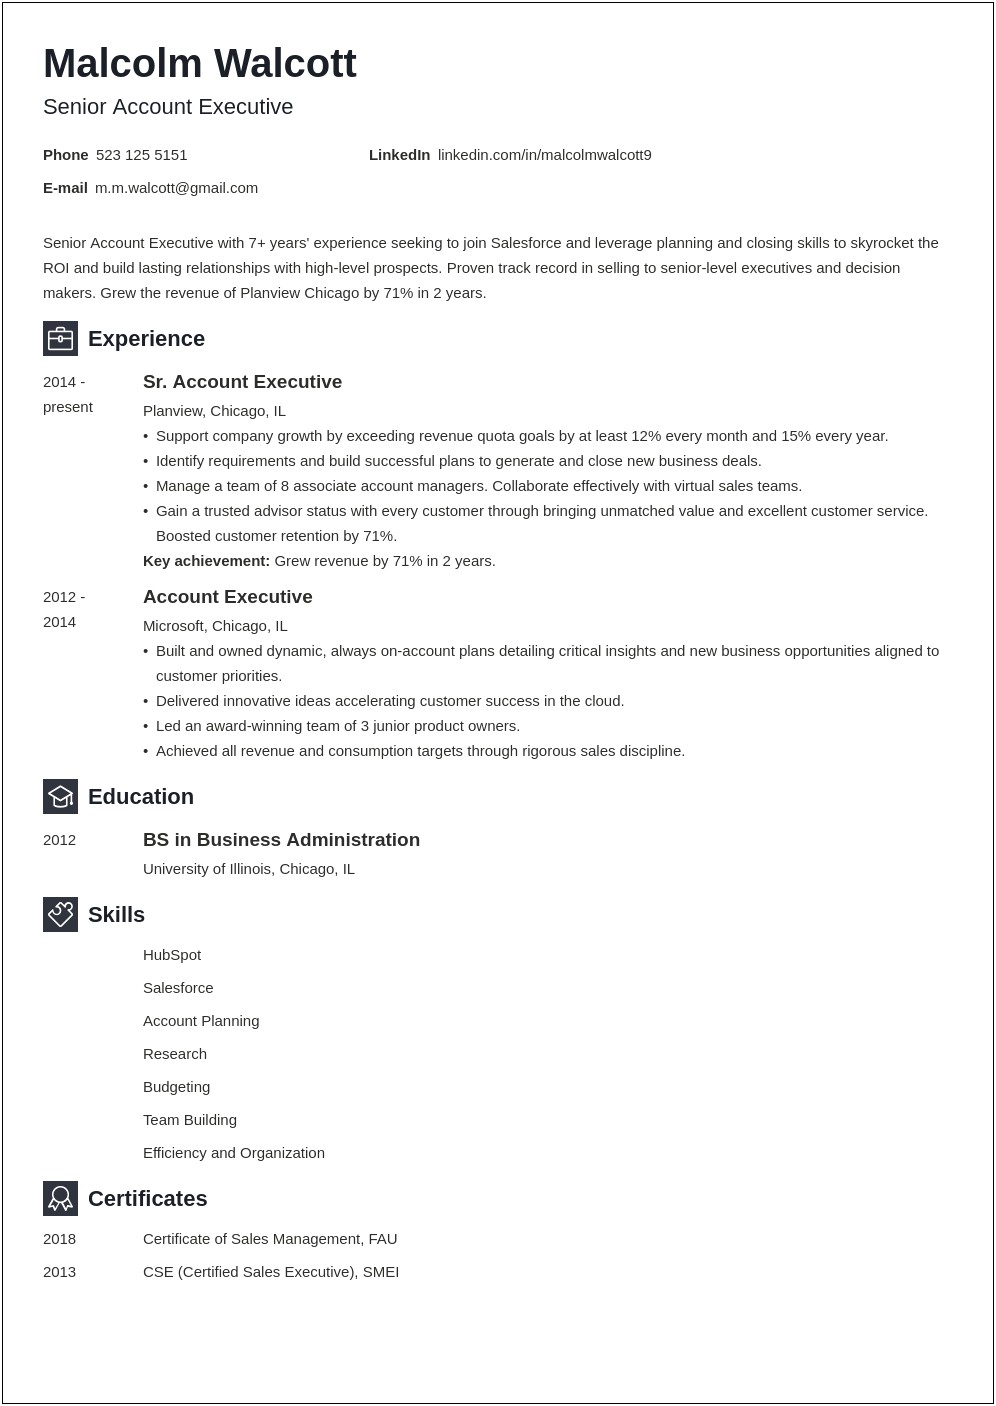 Sample Business Development Account Executive Resume